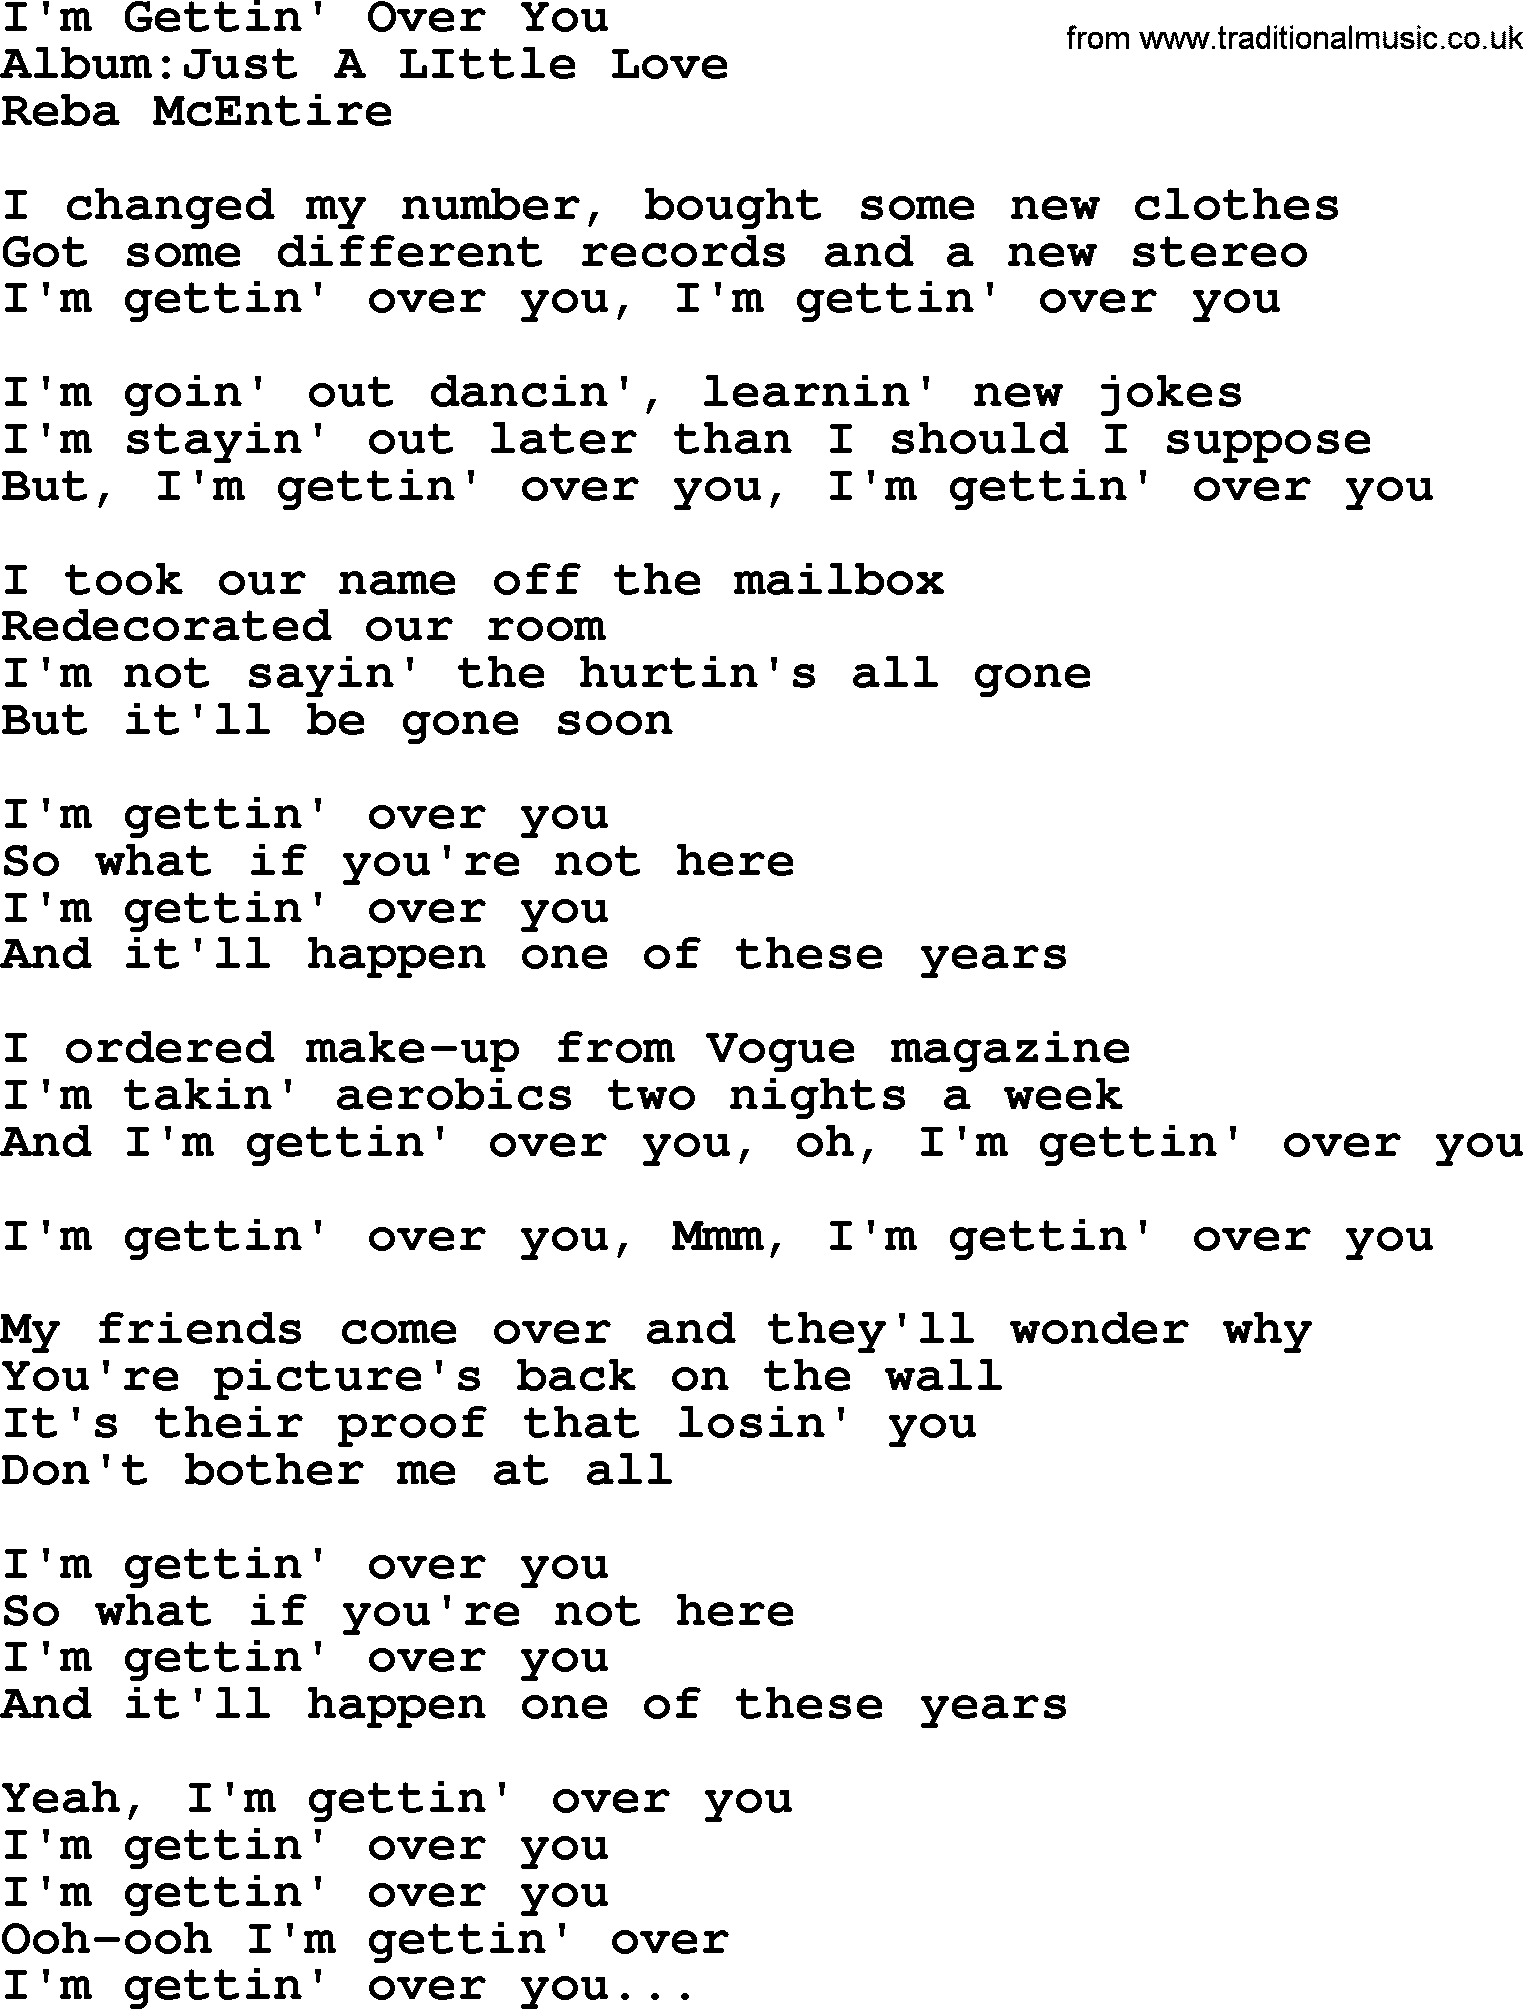 Reba McEntire song: I'm Gettin' Over You lyrics